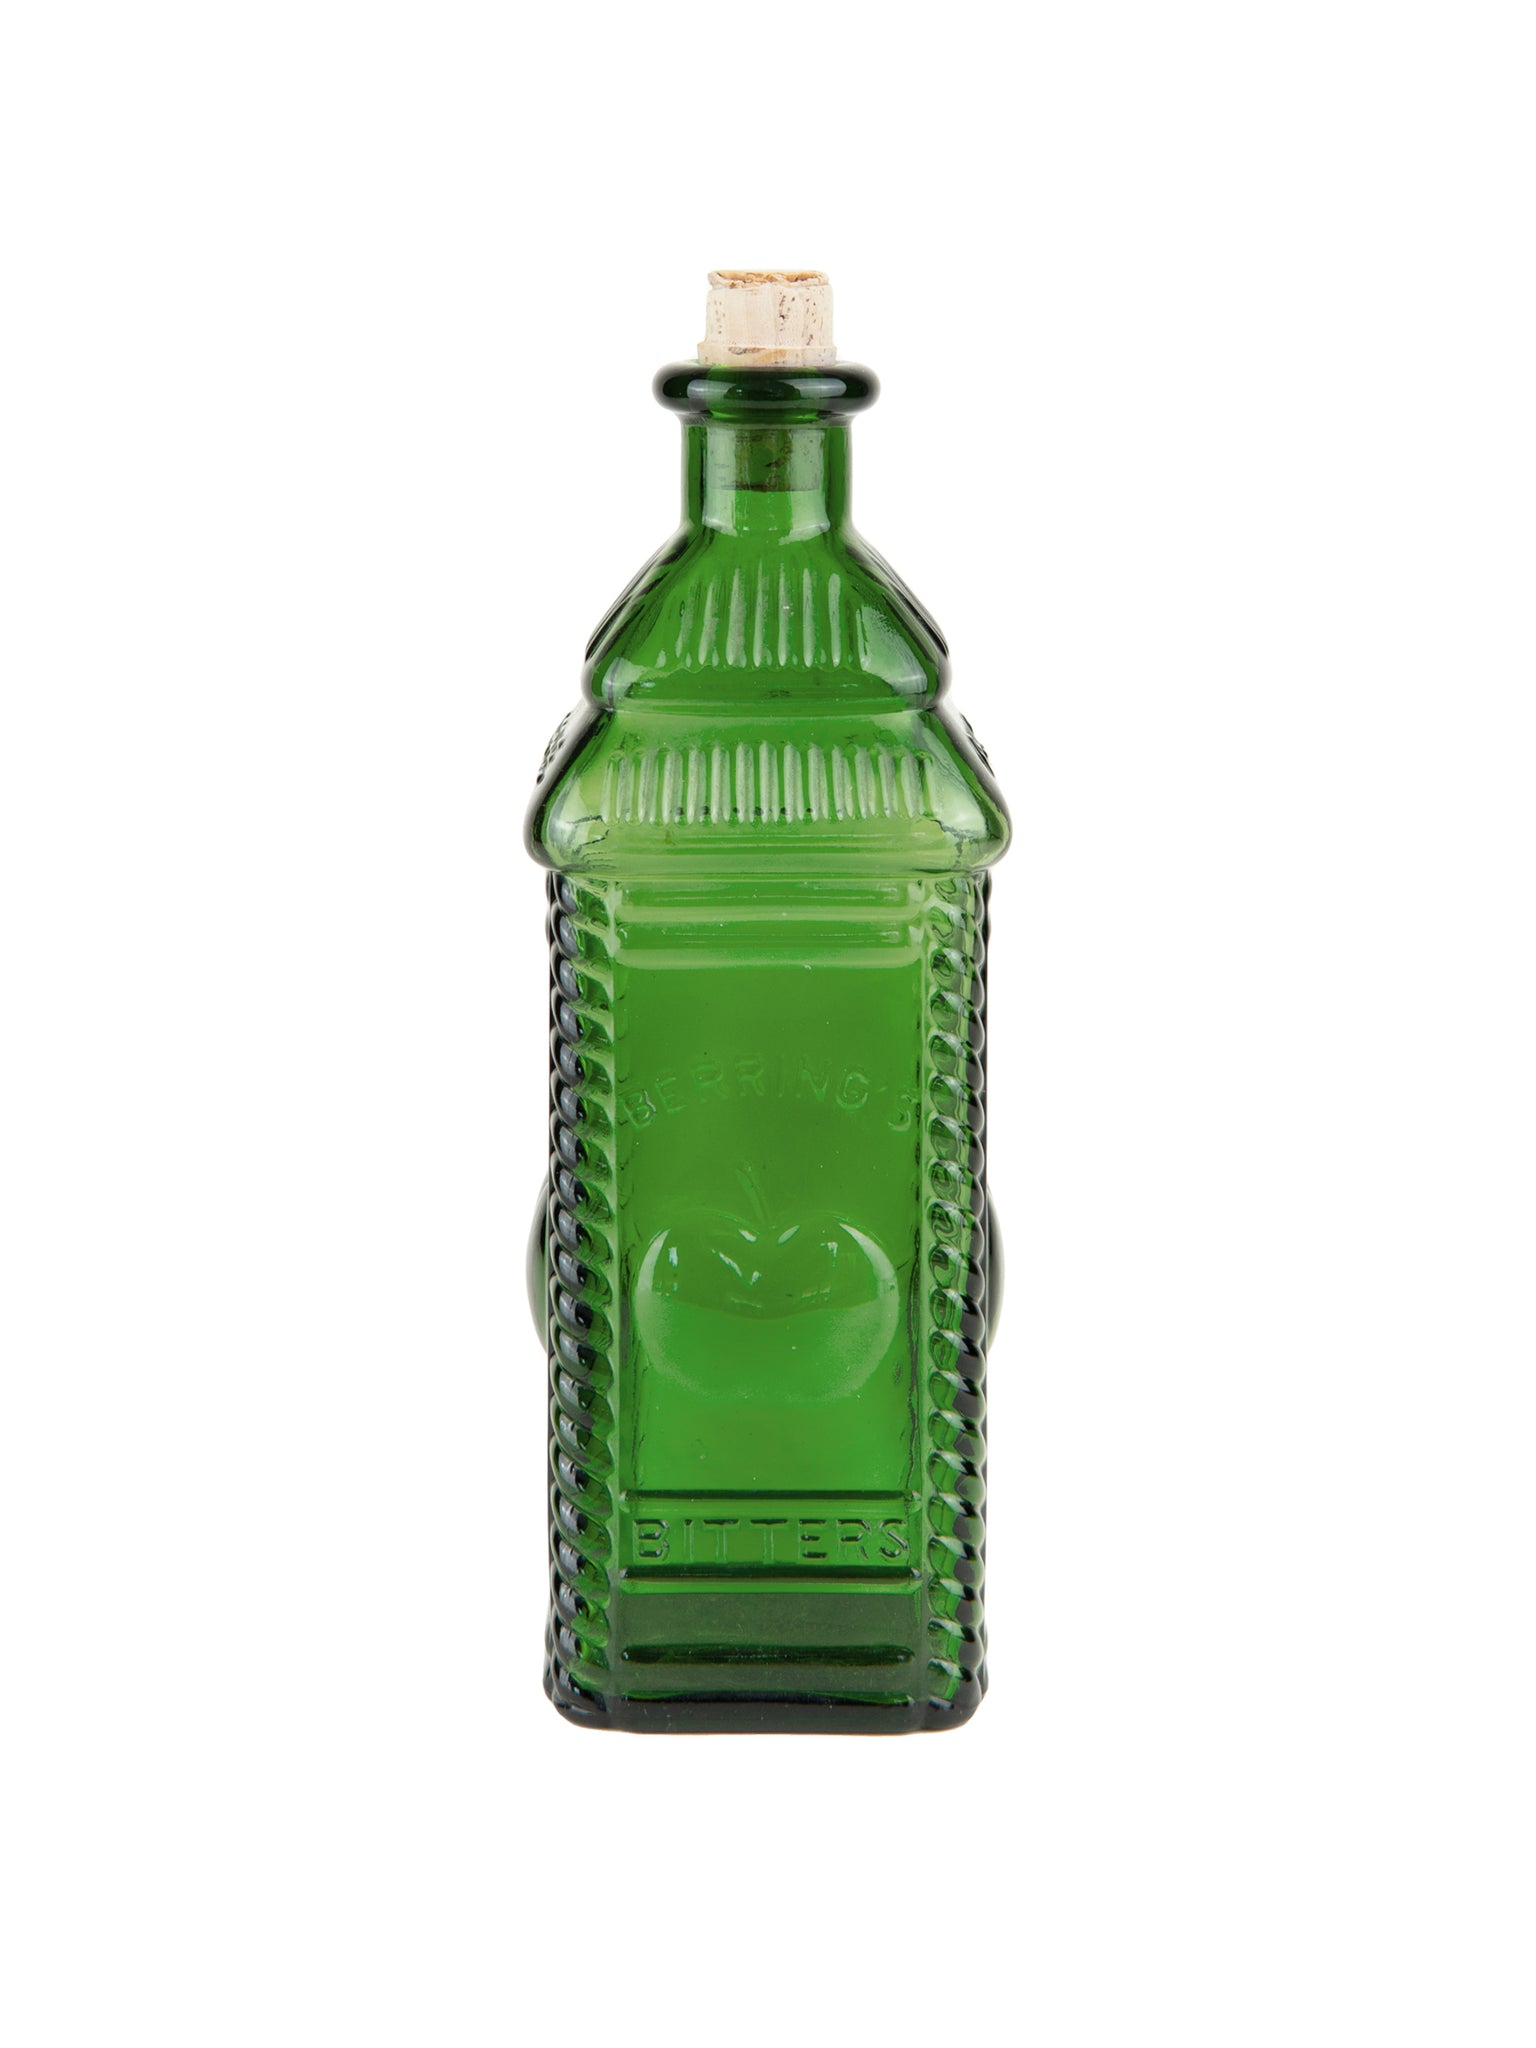 Vintage Retro Berrings Apple Bitters Glass Bottle Green Glass Tall Bottle Weston Table